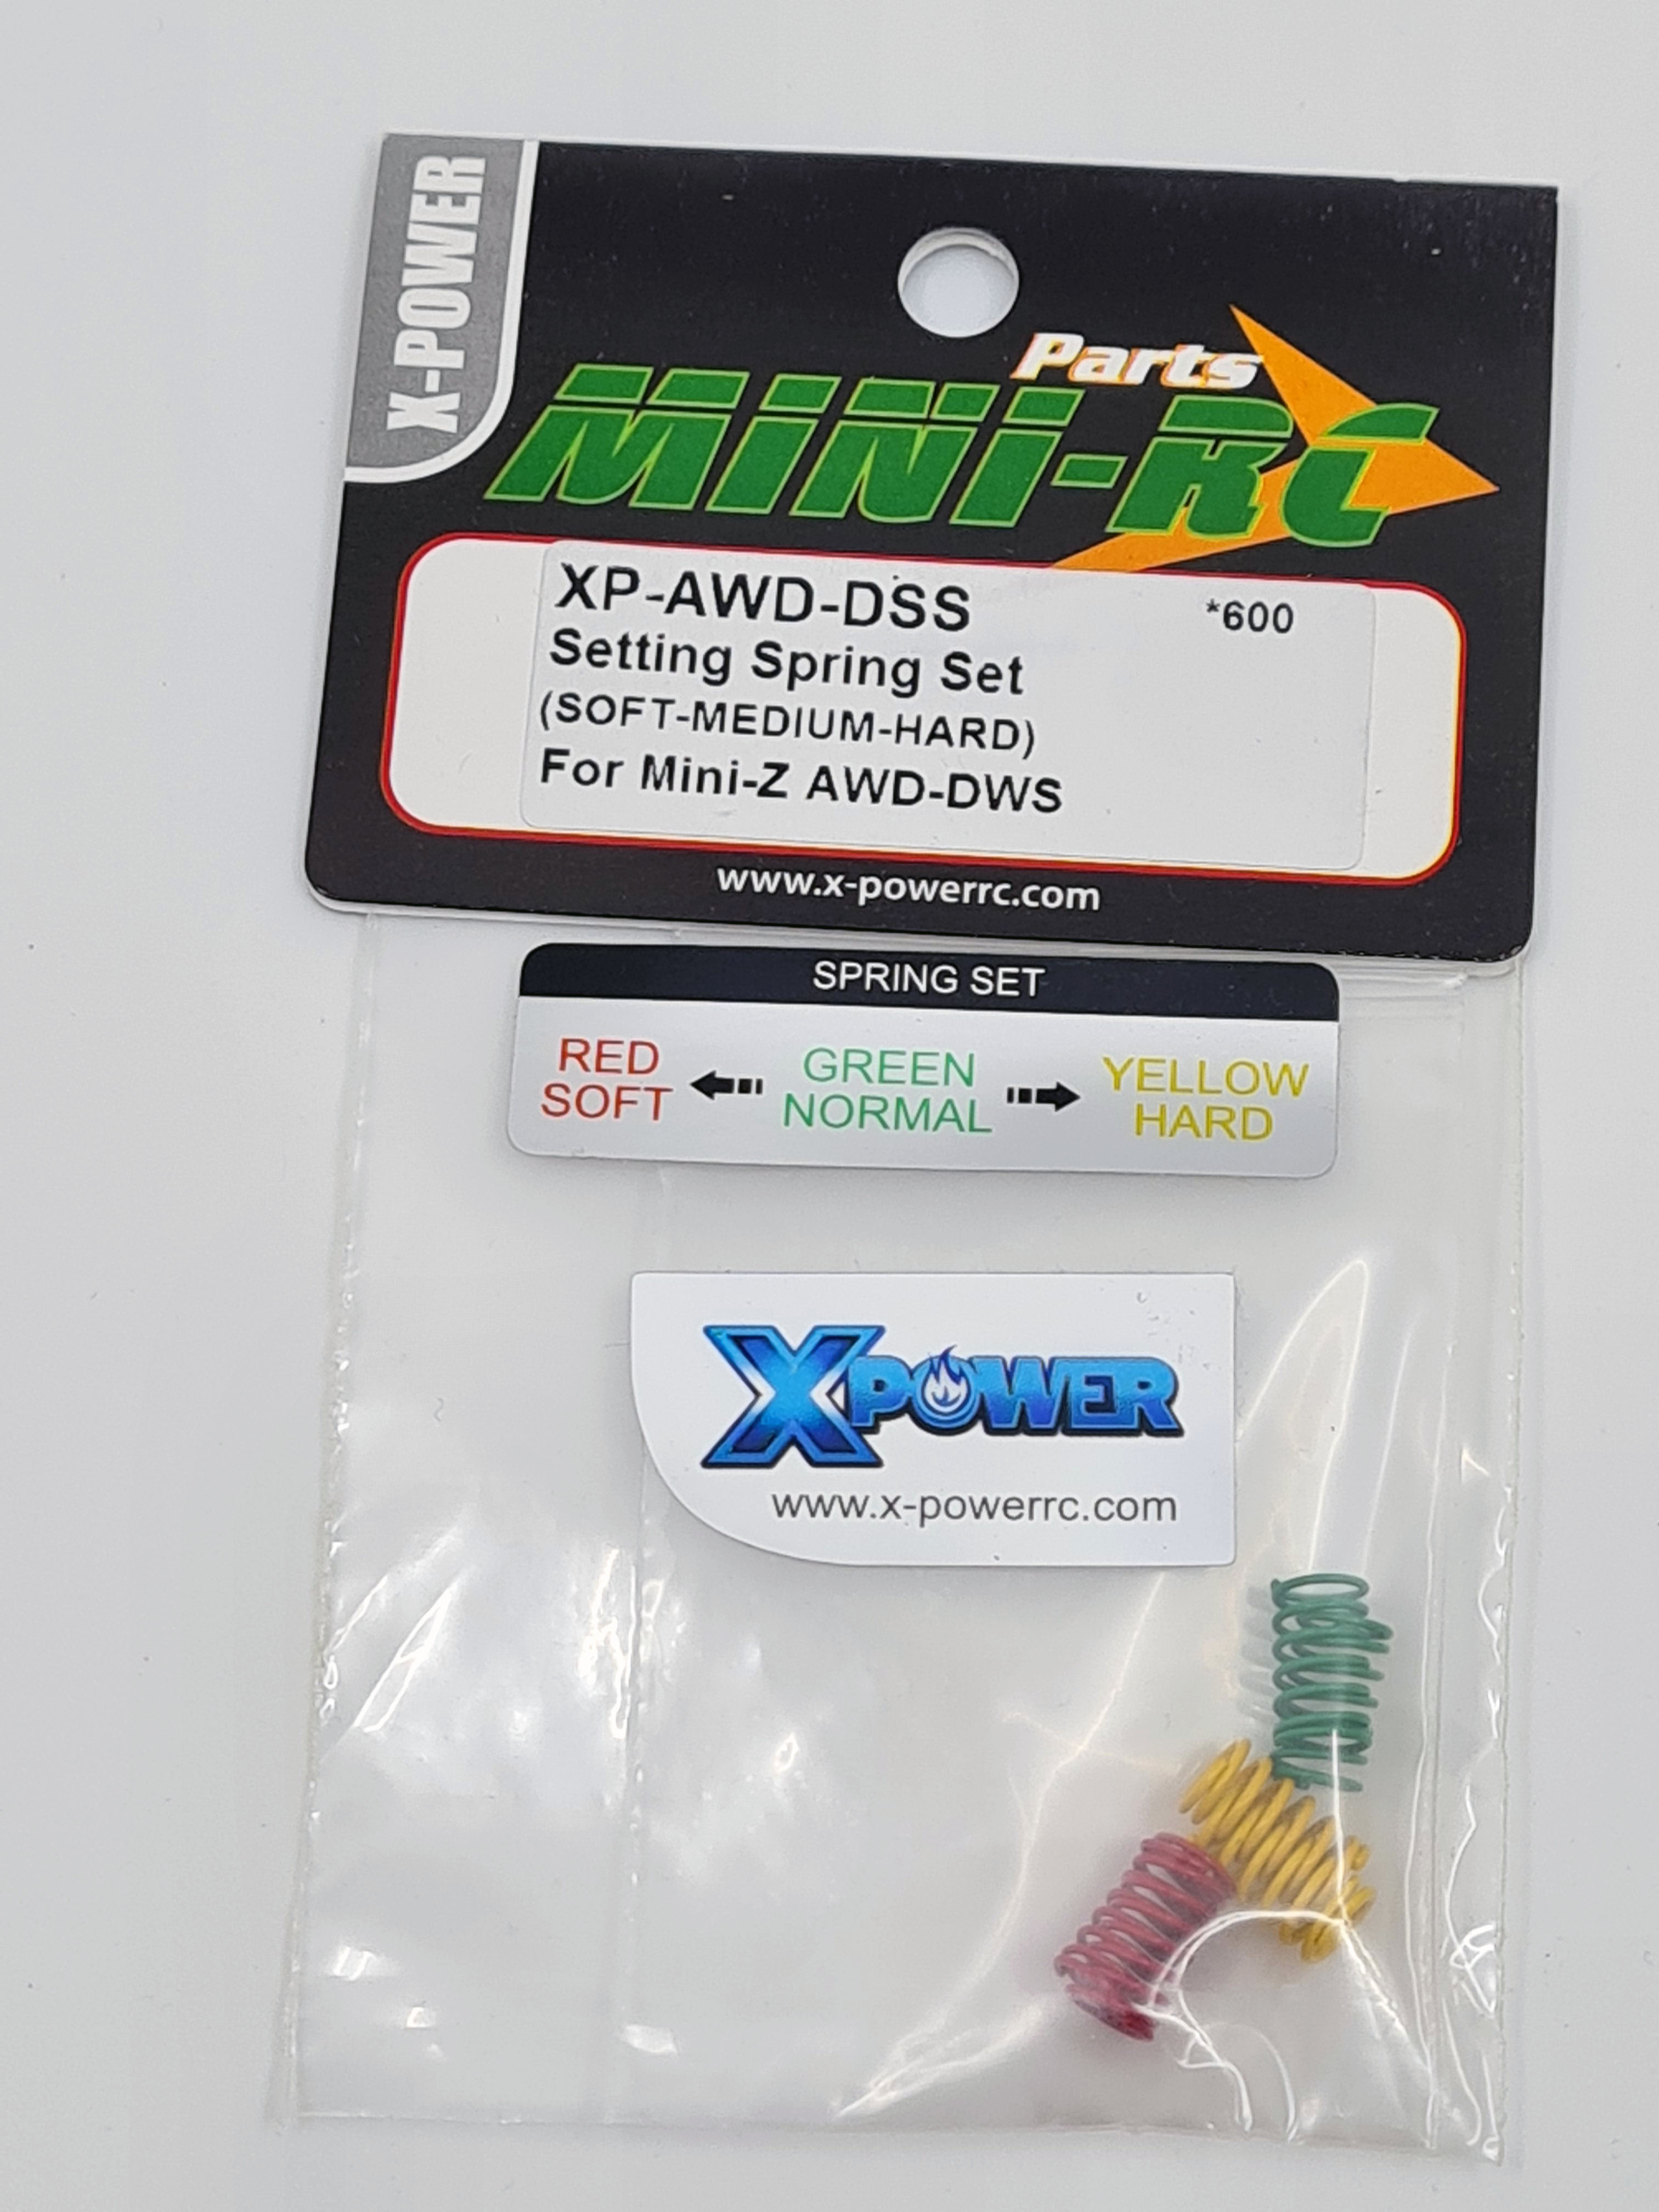 XP-AWD-DSS,Setting Spring-Set,x-power